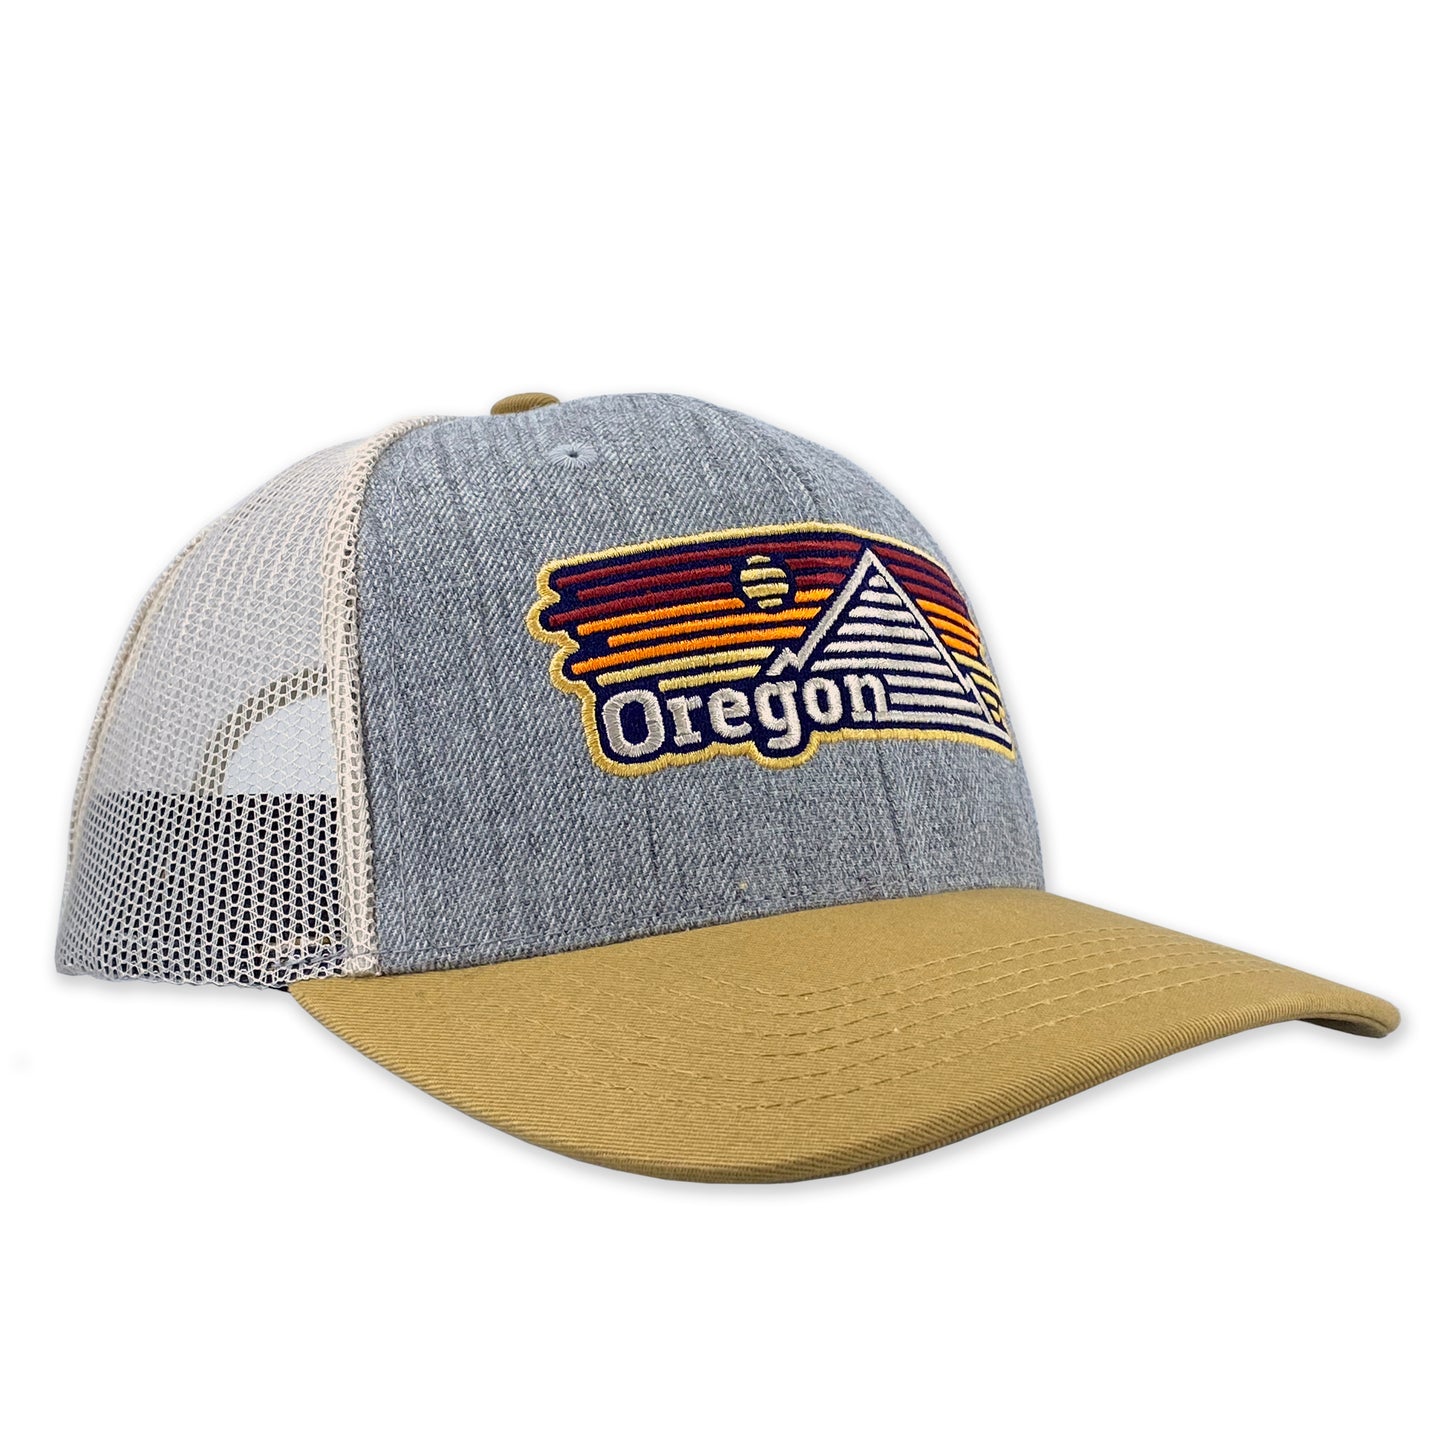 Oregon Horizons | Curved bill snapback hat